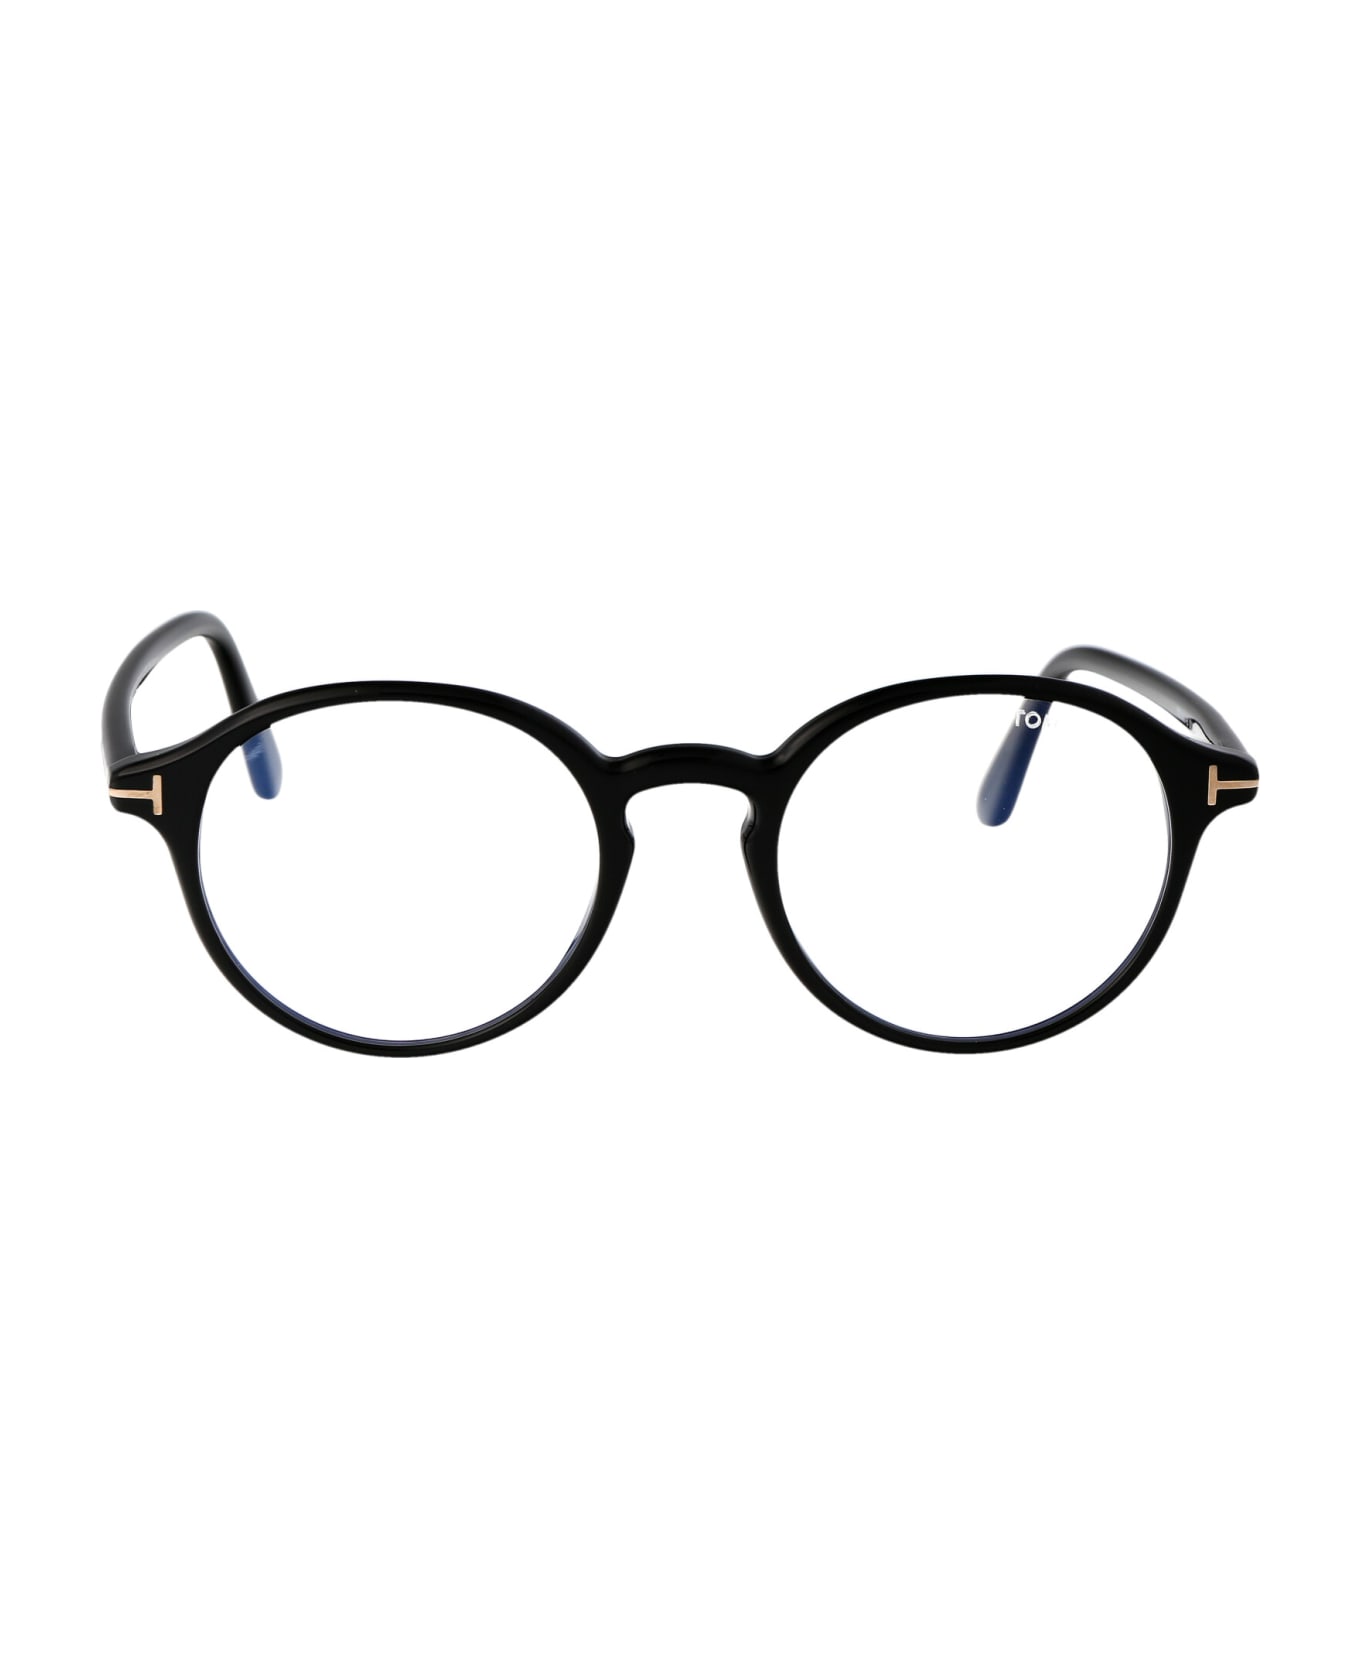 Tom Ford Eyewear Ft5867-b Glasses - 001 Nero Lucido アイウェア